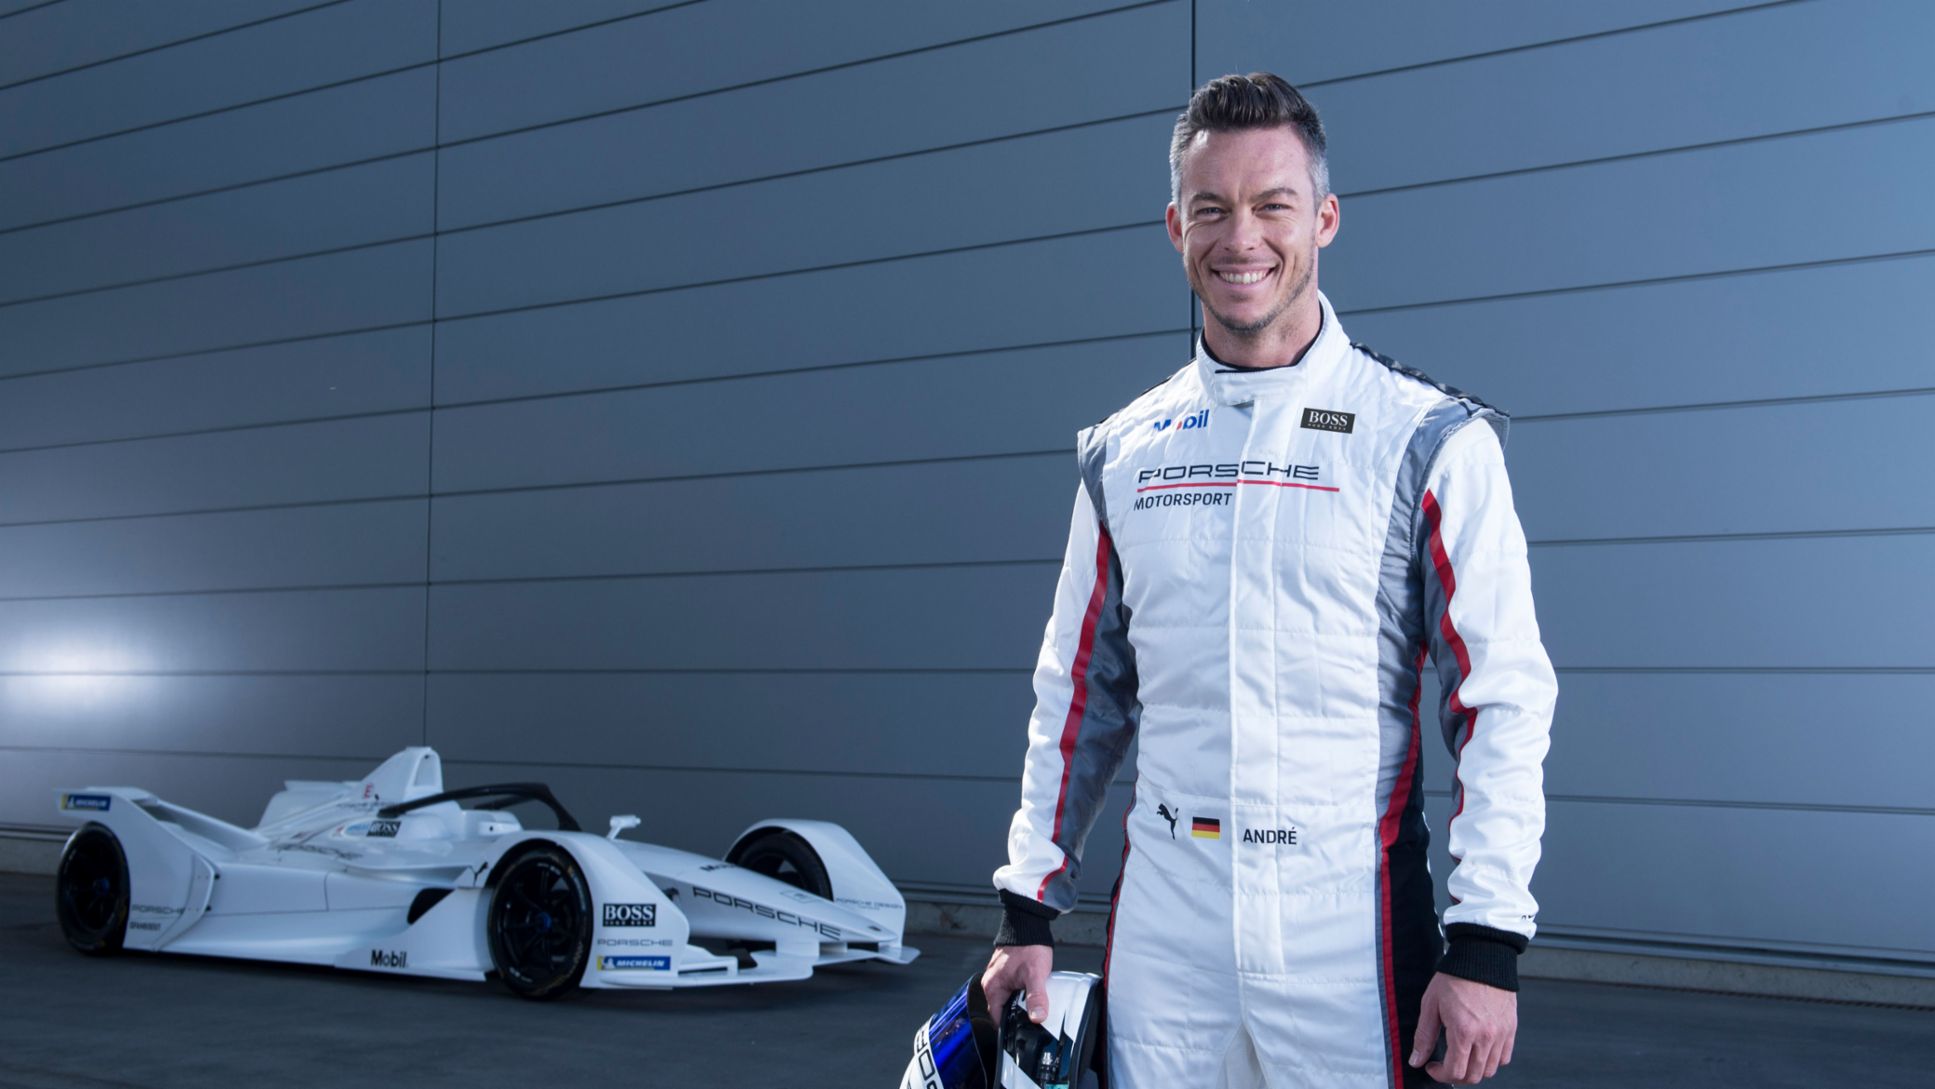 André Lotterer, piloto del equipo Porsche de Fórmula E, 2019, Porsche AG